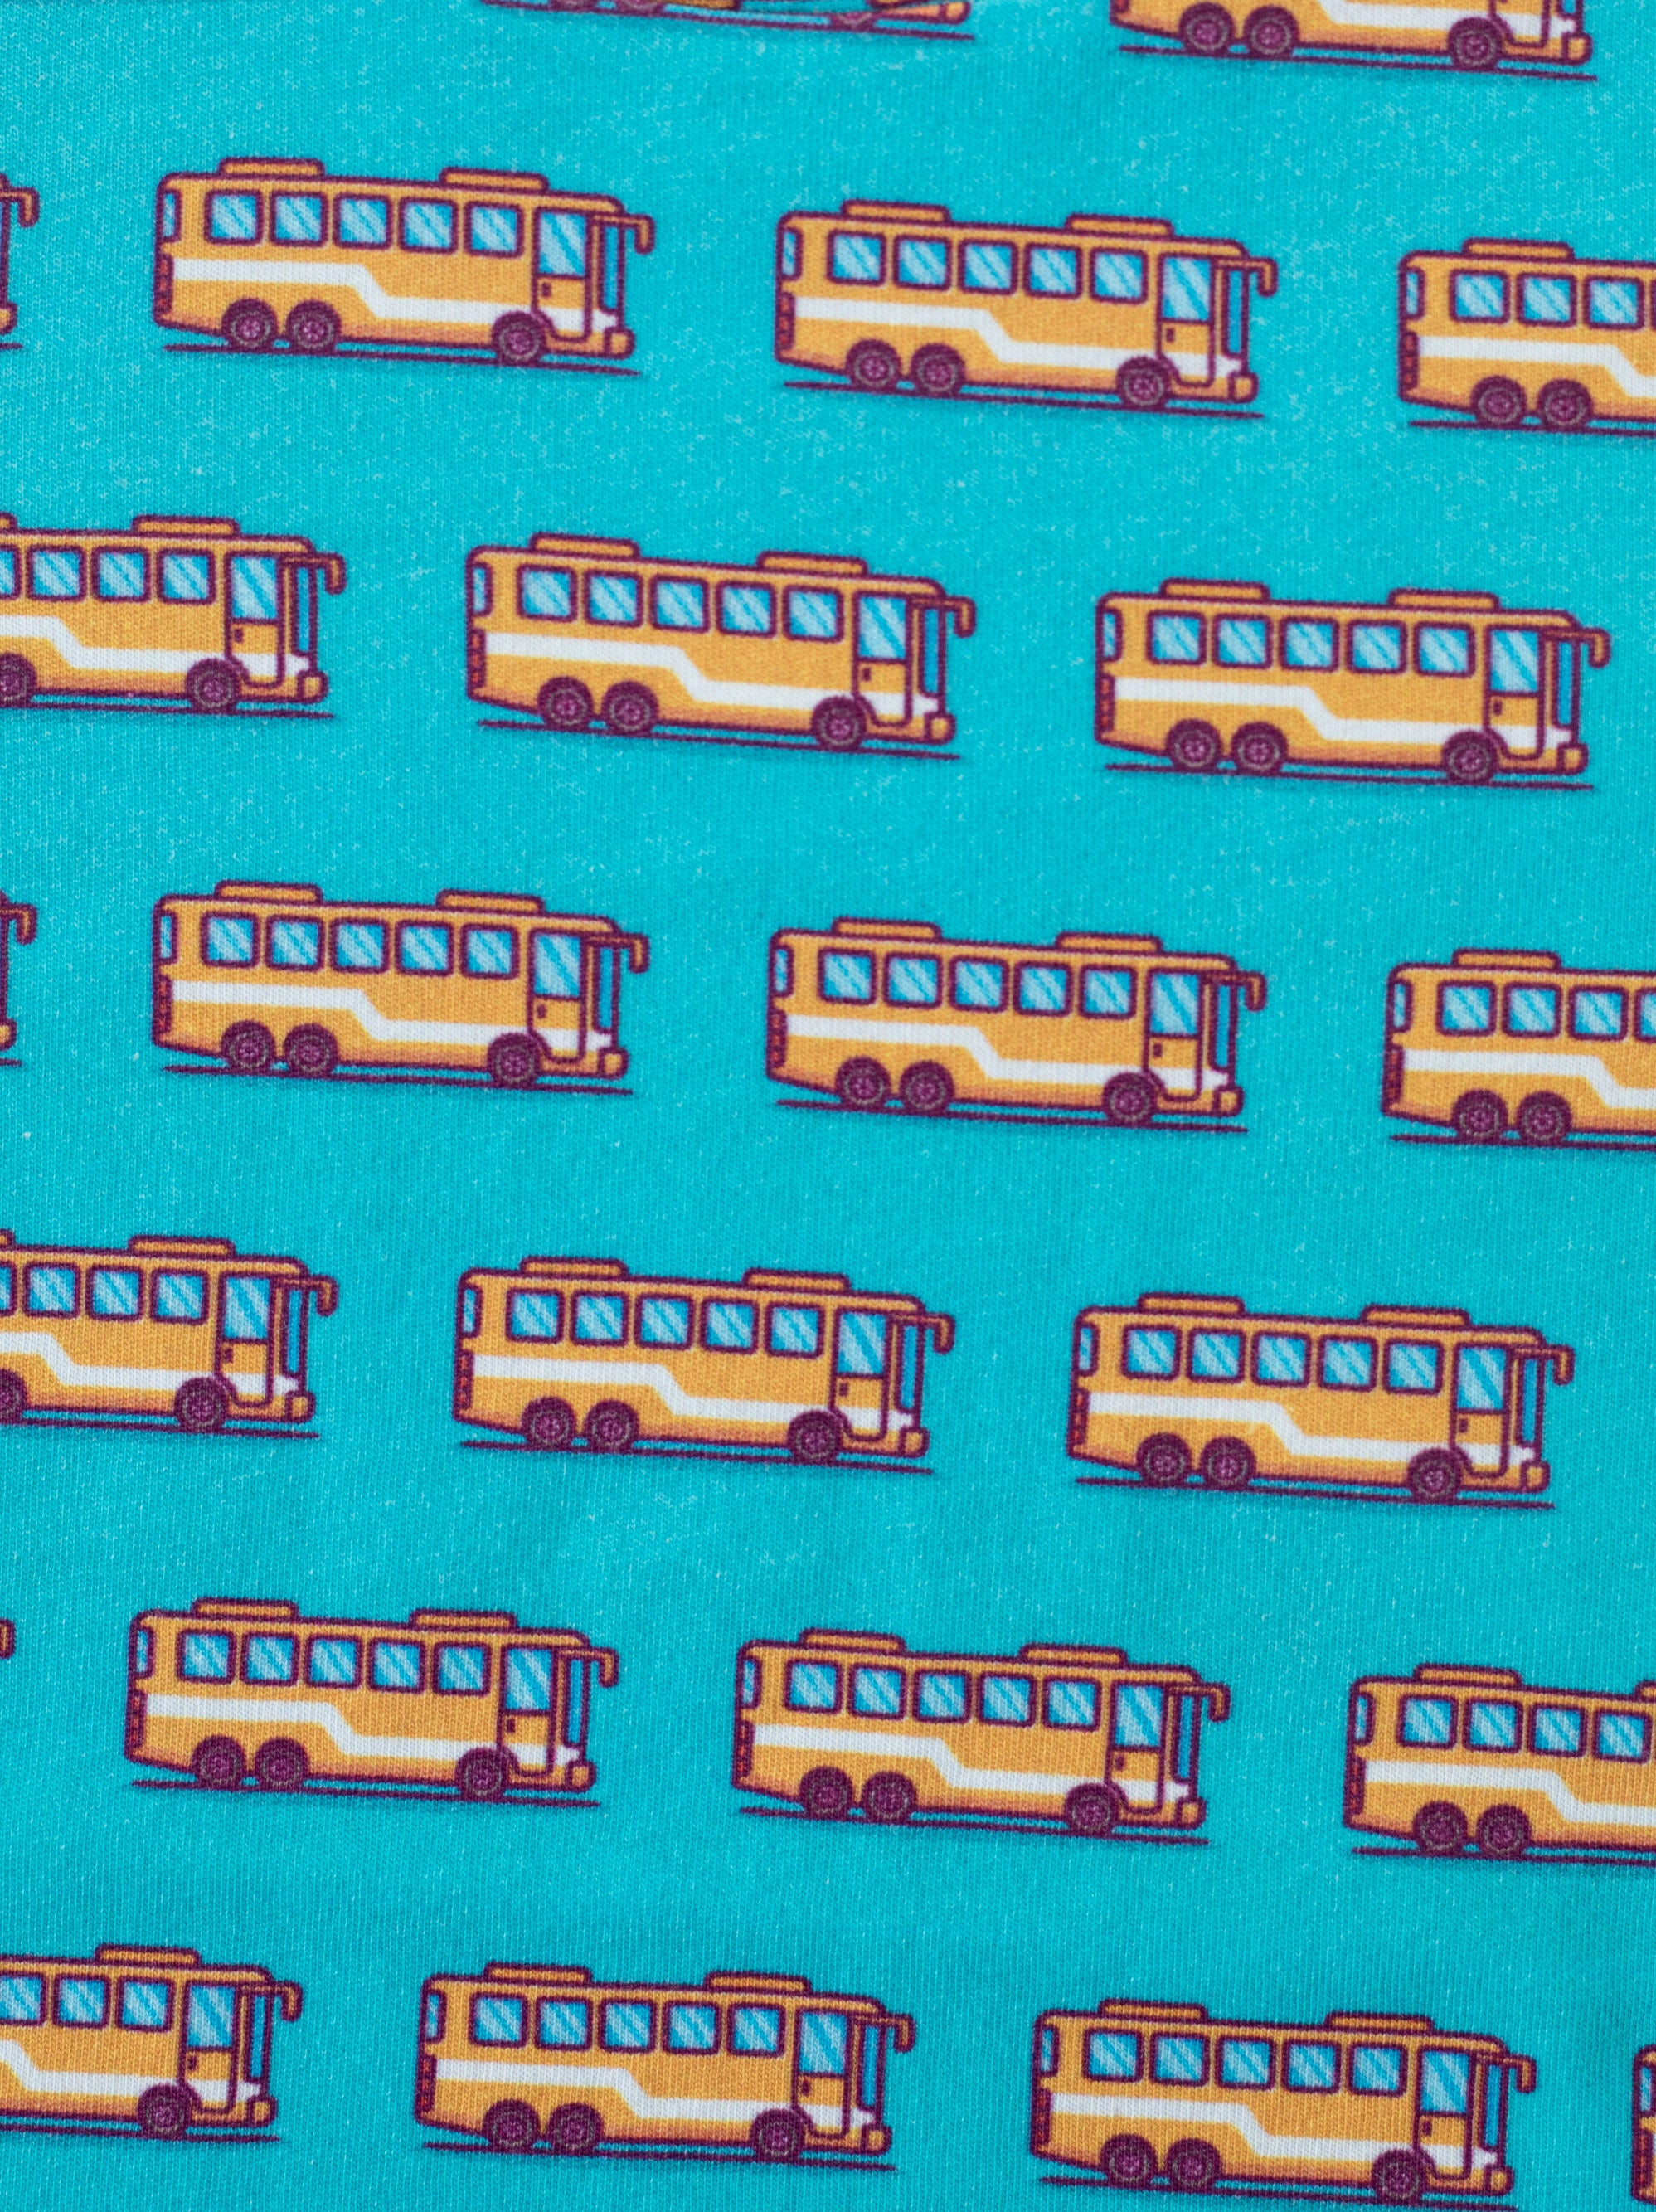 Bus-Printed T-Shirt